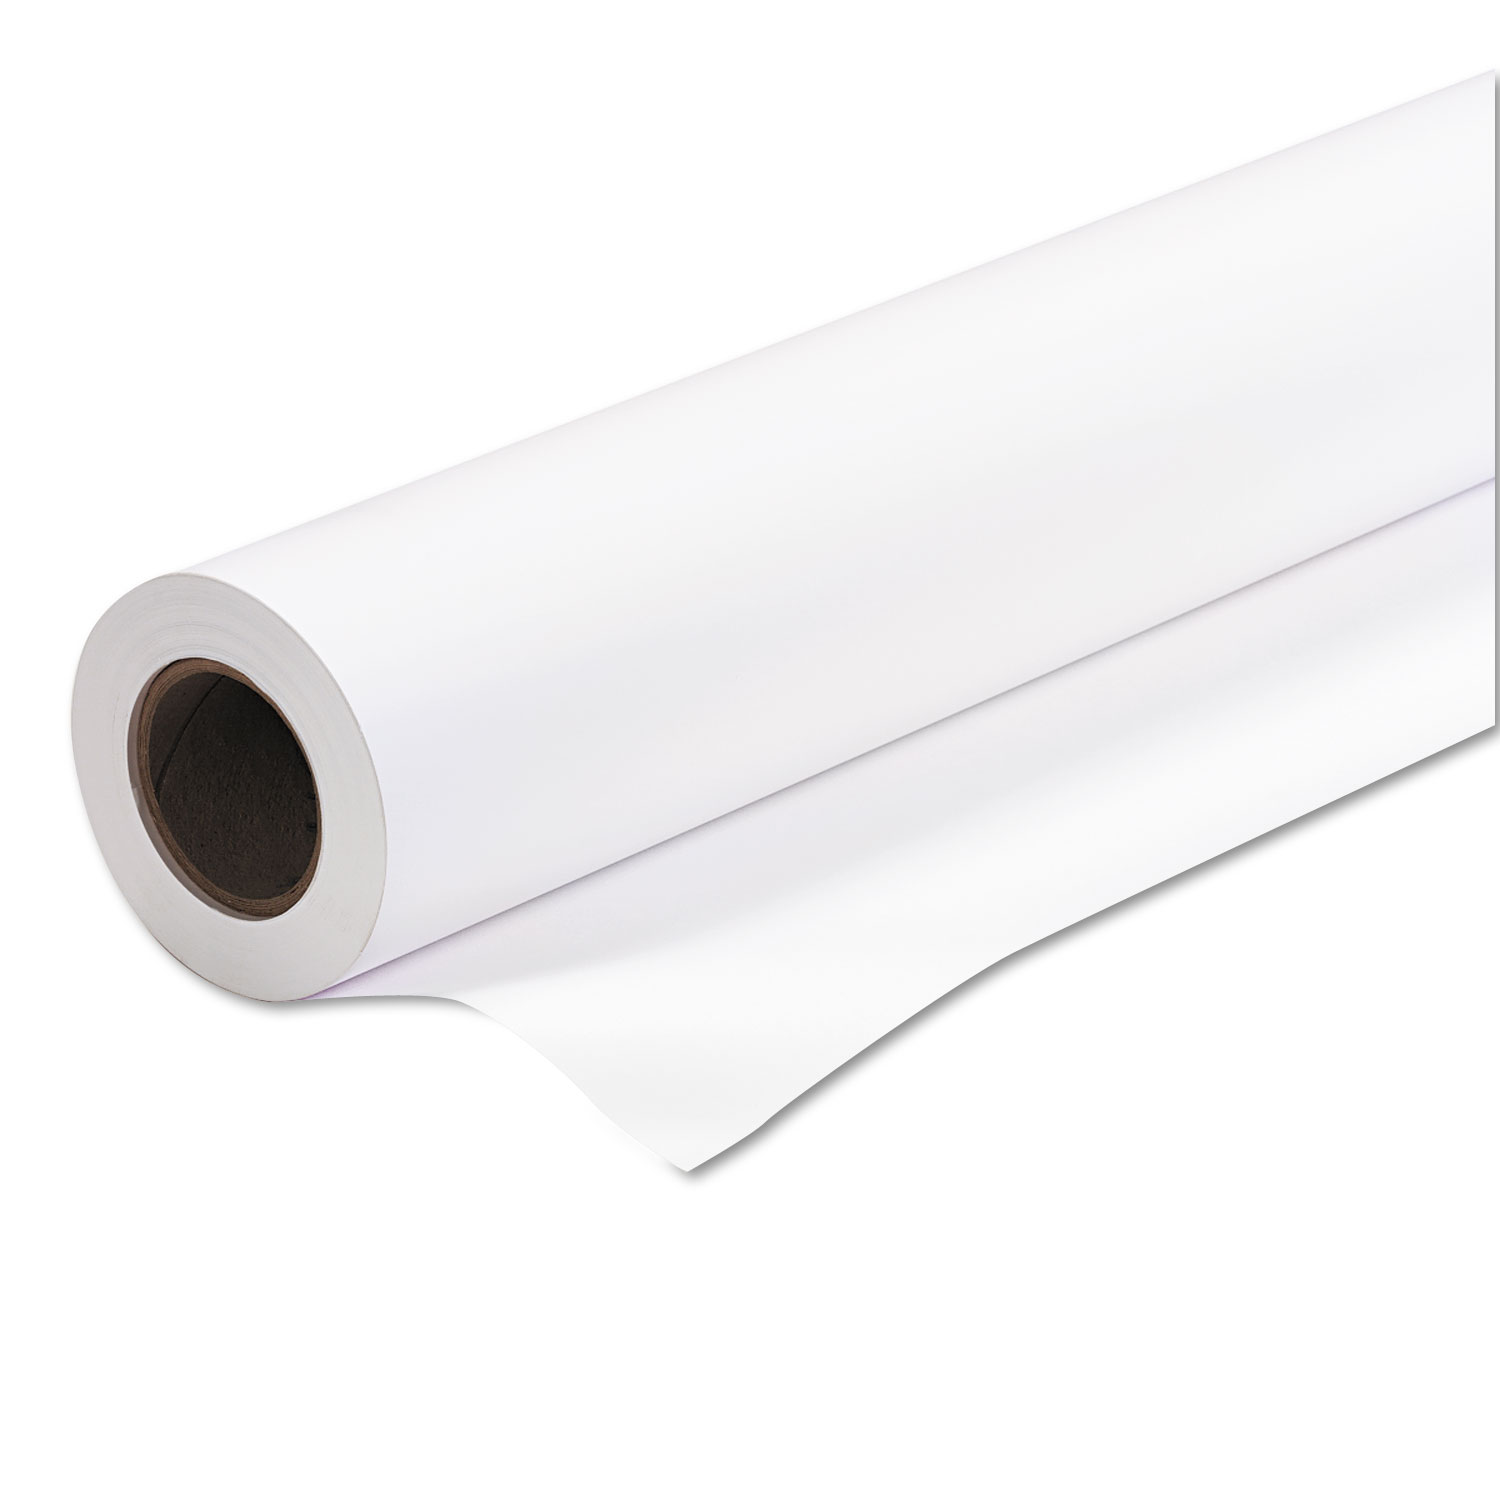  Iconex 45151 Amerigo Wide-Format Paper, 2 Core, 24 lb, 24 x 150 ft, Coated White (ICX90750210) 